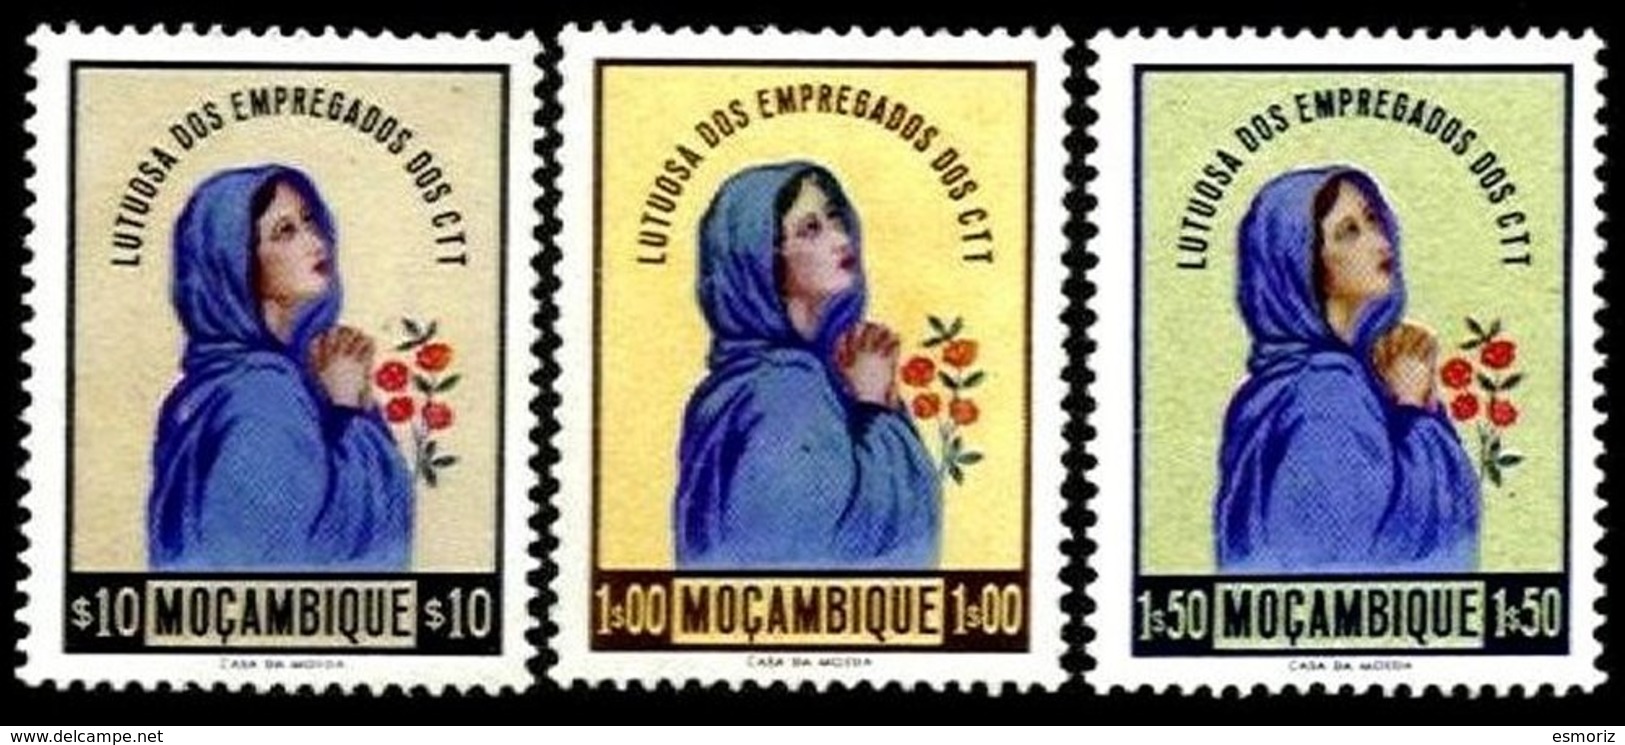 MOÇAMBIQUE, Vinhetas, F/VF - Unused Stamps